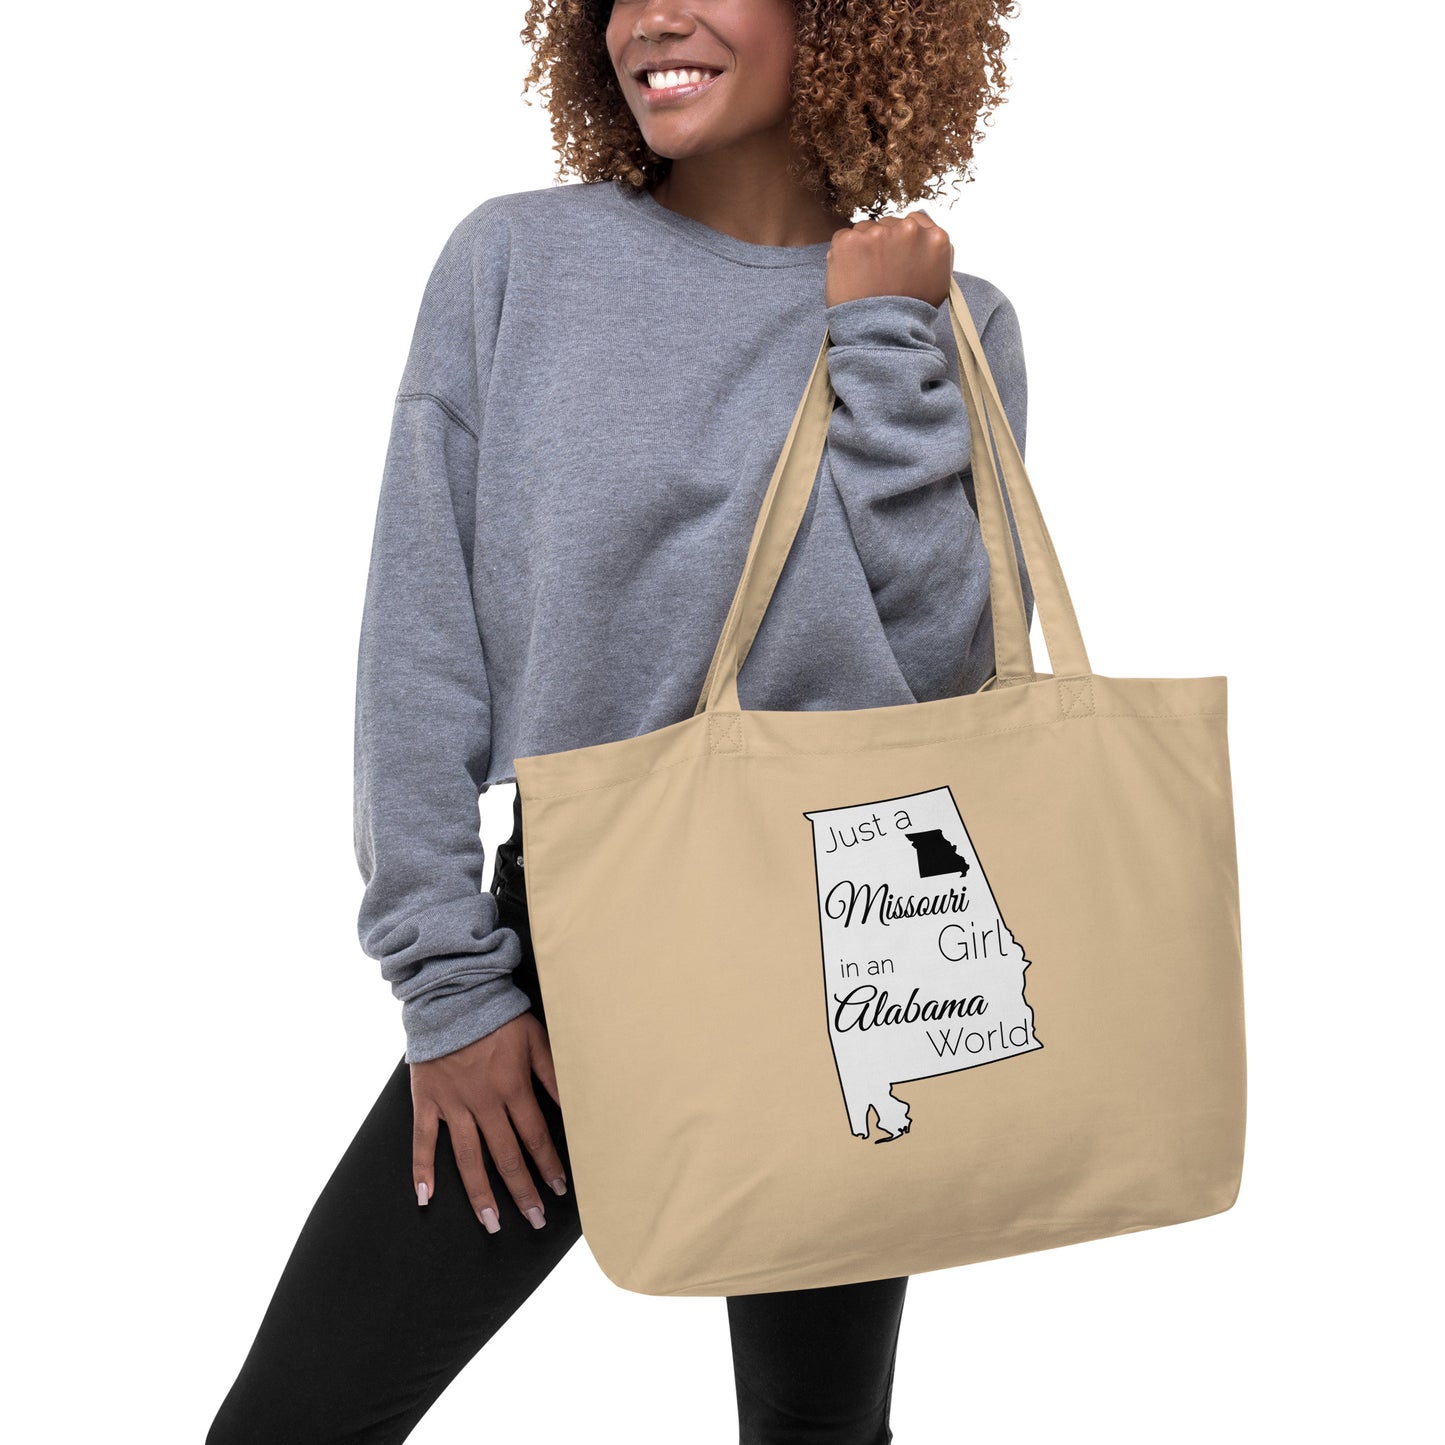 Just a Missouri Girl in an Alabama World Large organic tote bag